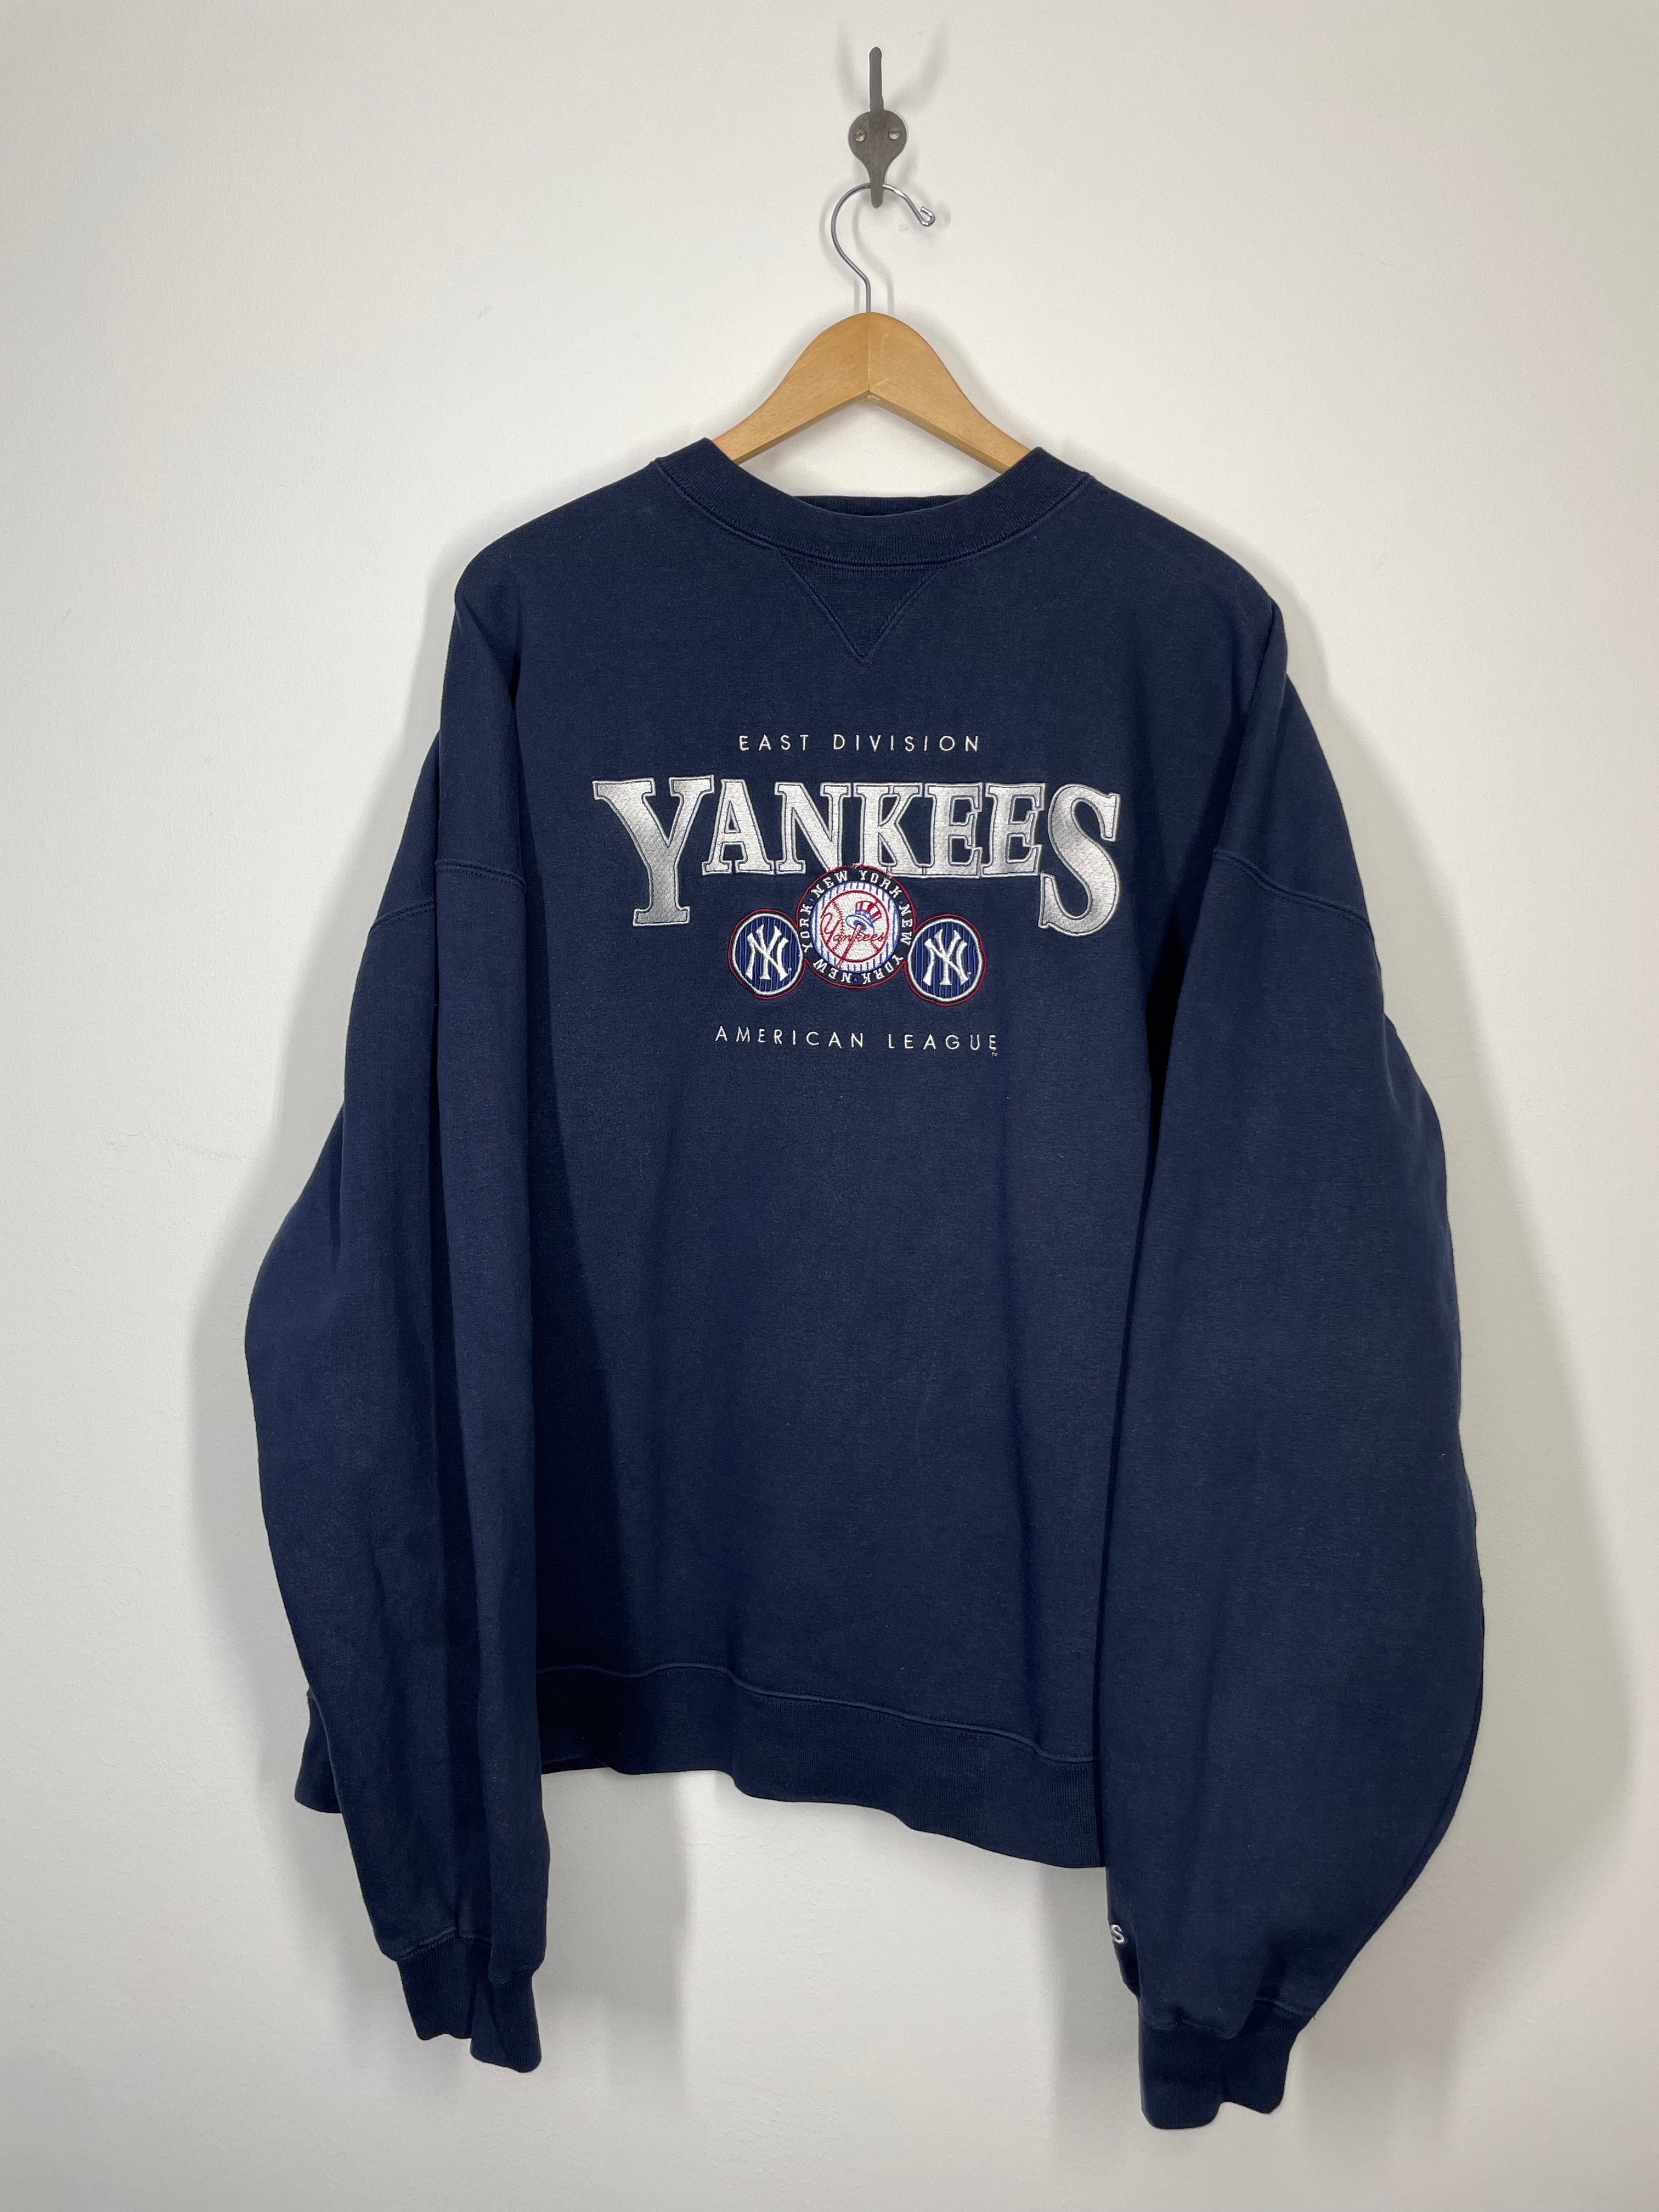 Major League Baseball New York Yankees retro logo T-shirt, hoodie